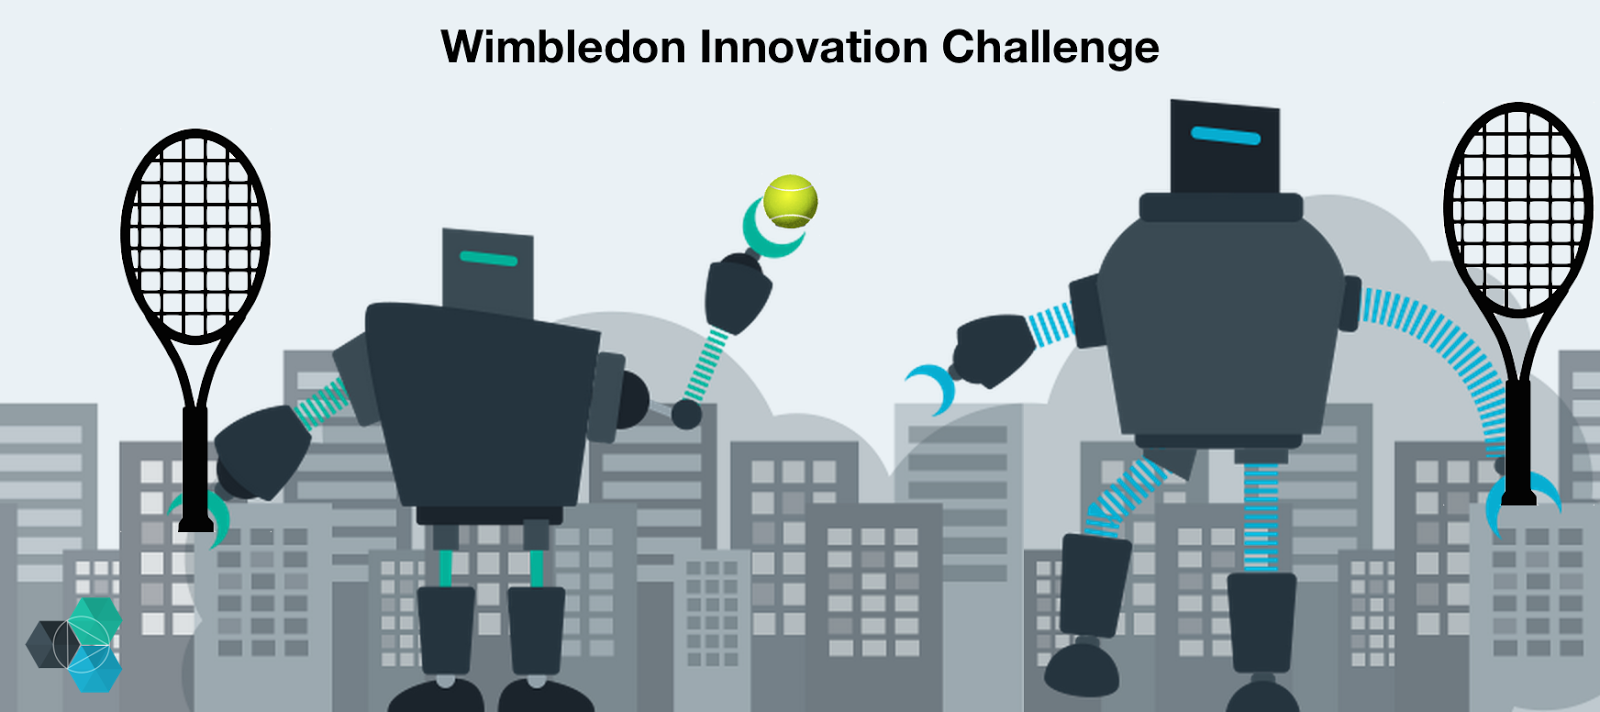 Bluemix, Robots, and the Wimbledon Innovation Challenge